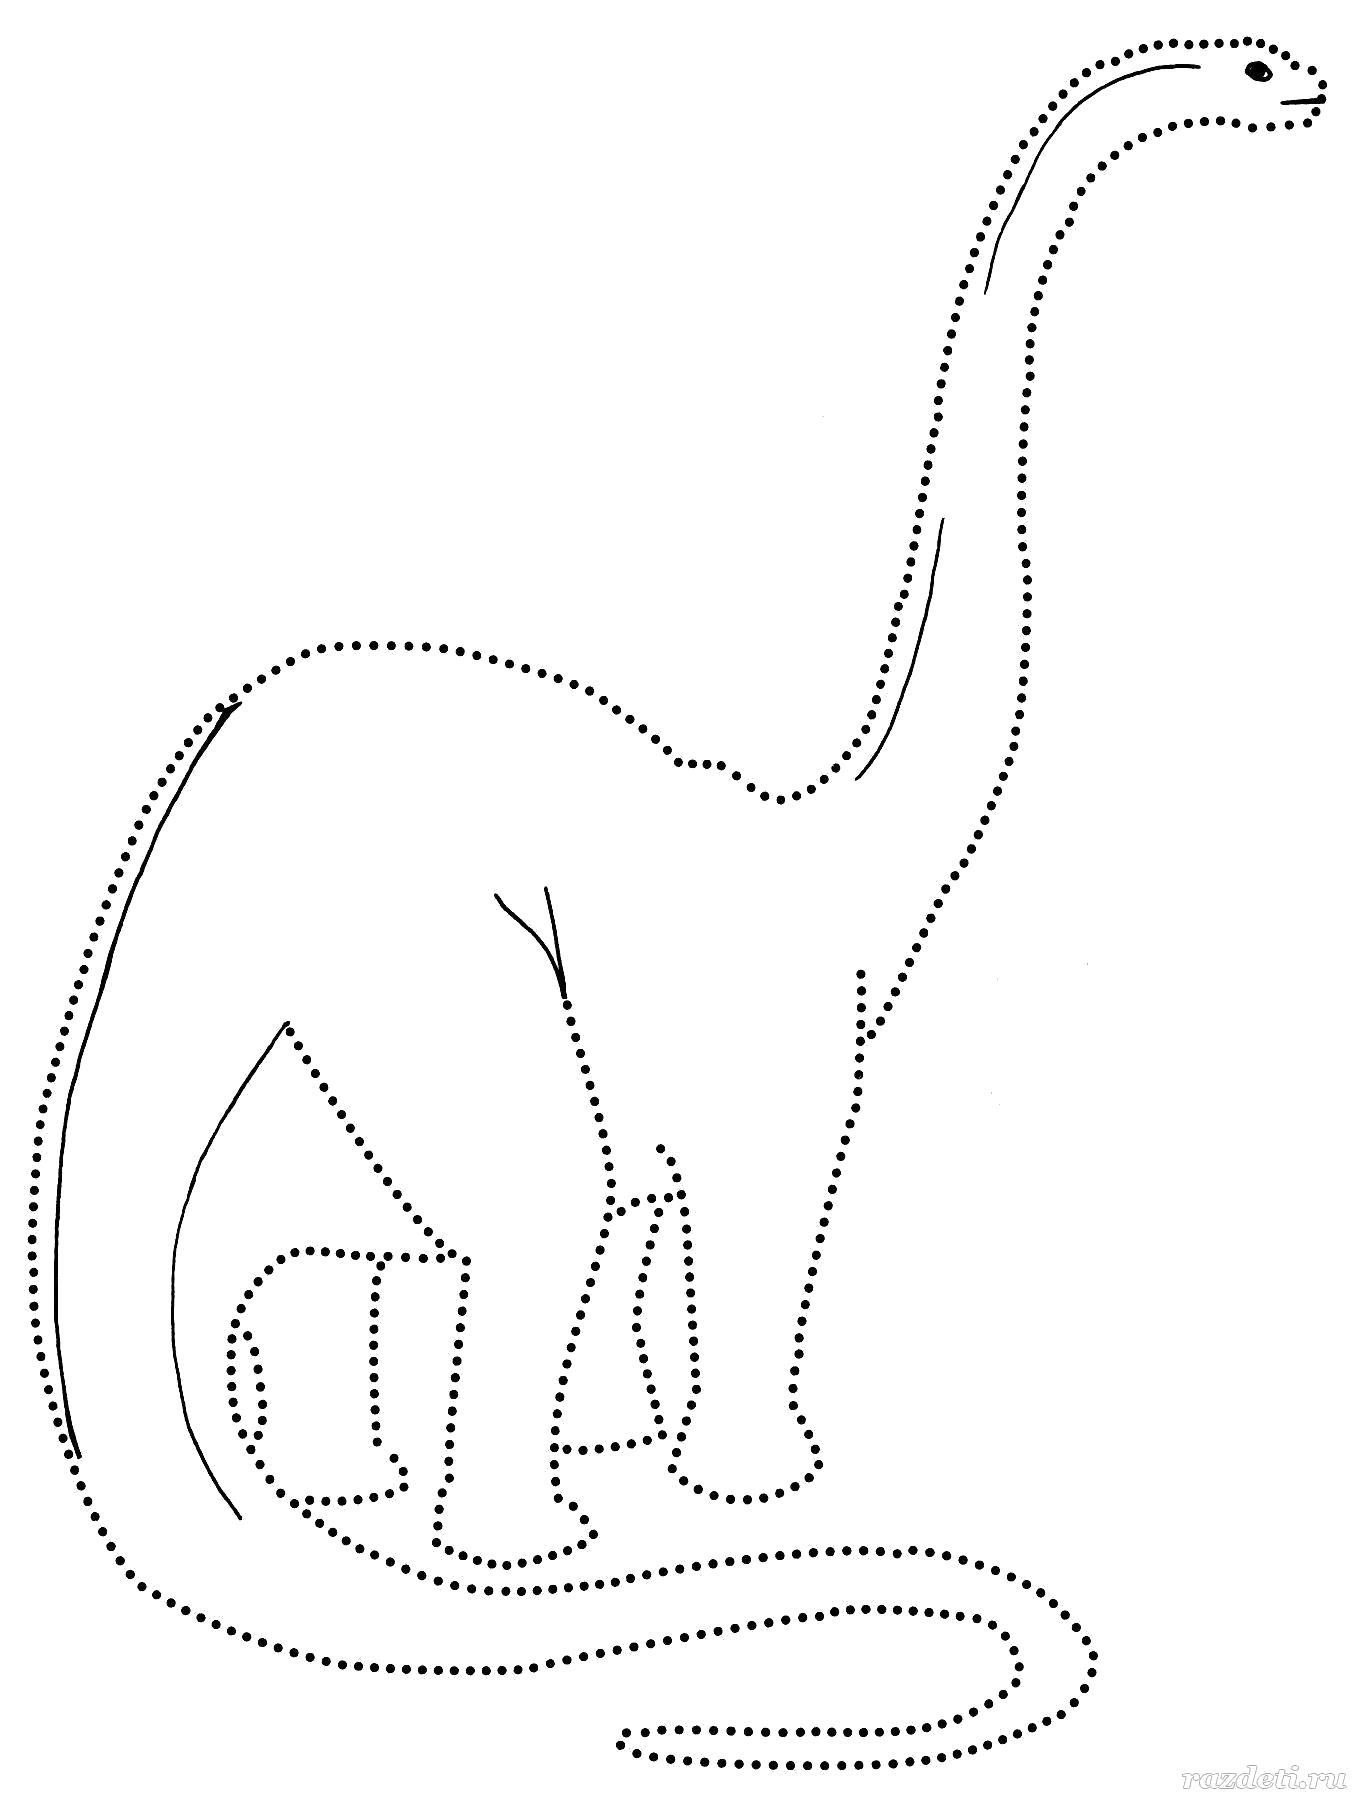 Название: Раскраска Раскраски для детей. Динозаврики по линиям. Категория: динозавр. Теги: динозавр.